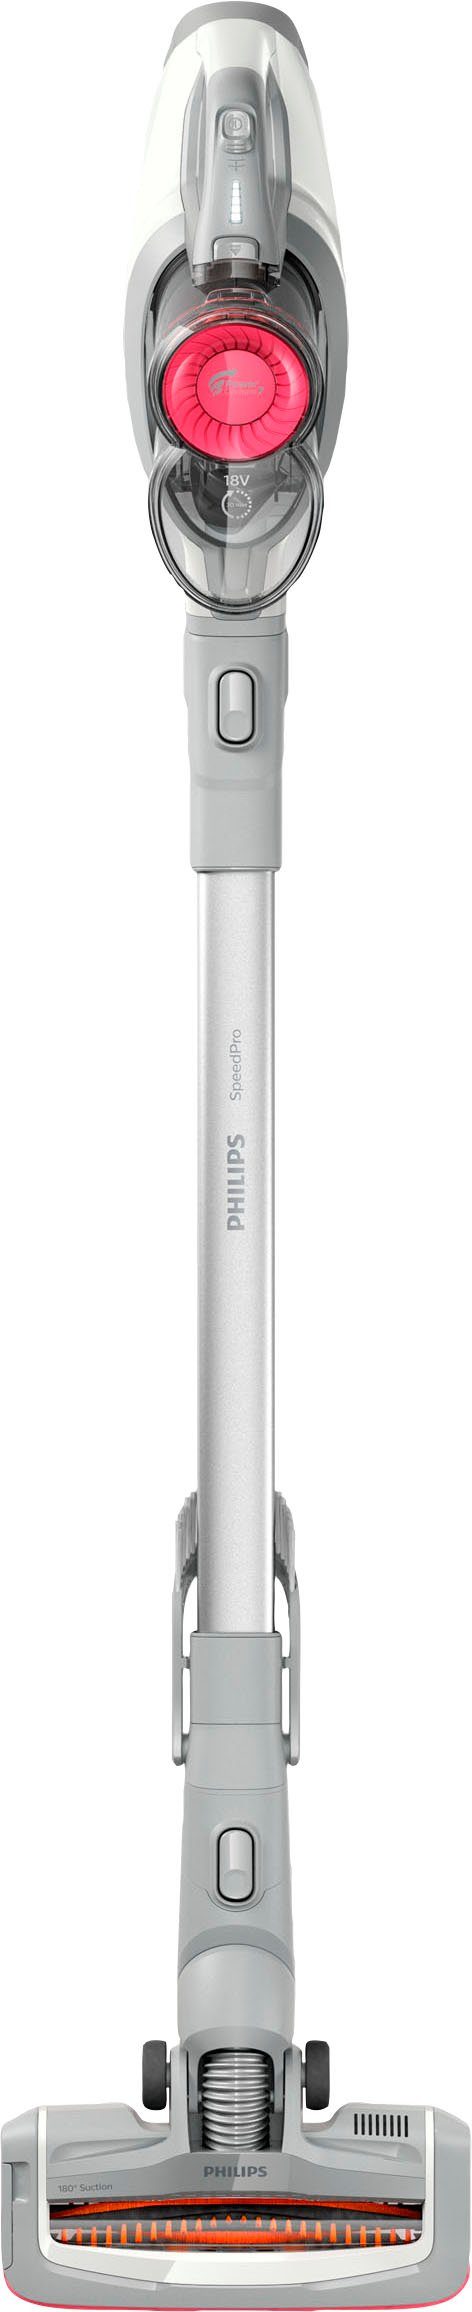 Philips Akku-Stielstaubsauger FC6723/01 SpeedPro, beutellos, 180°-Saugdüse, 30 Akkulaufzeit, Min. weiß